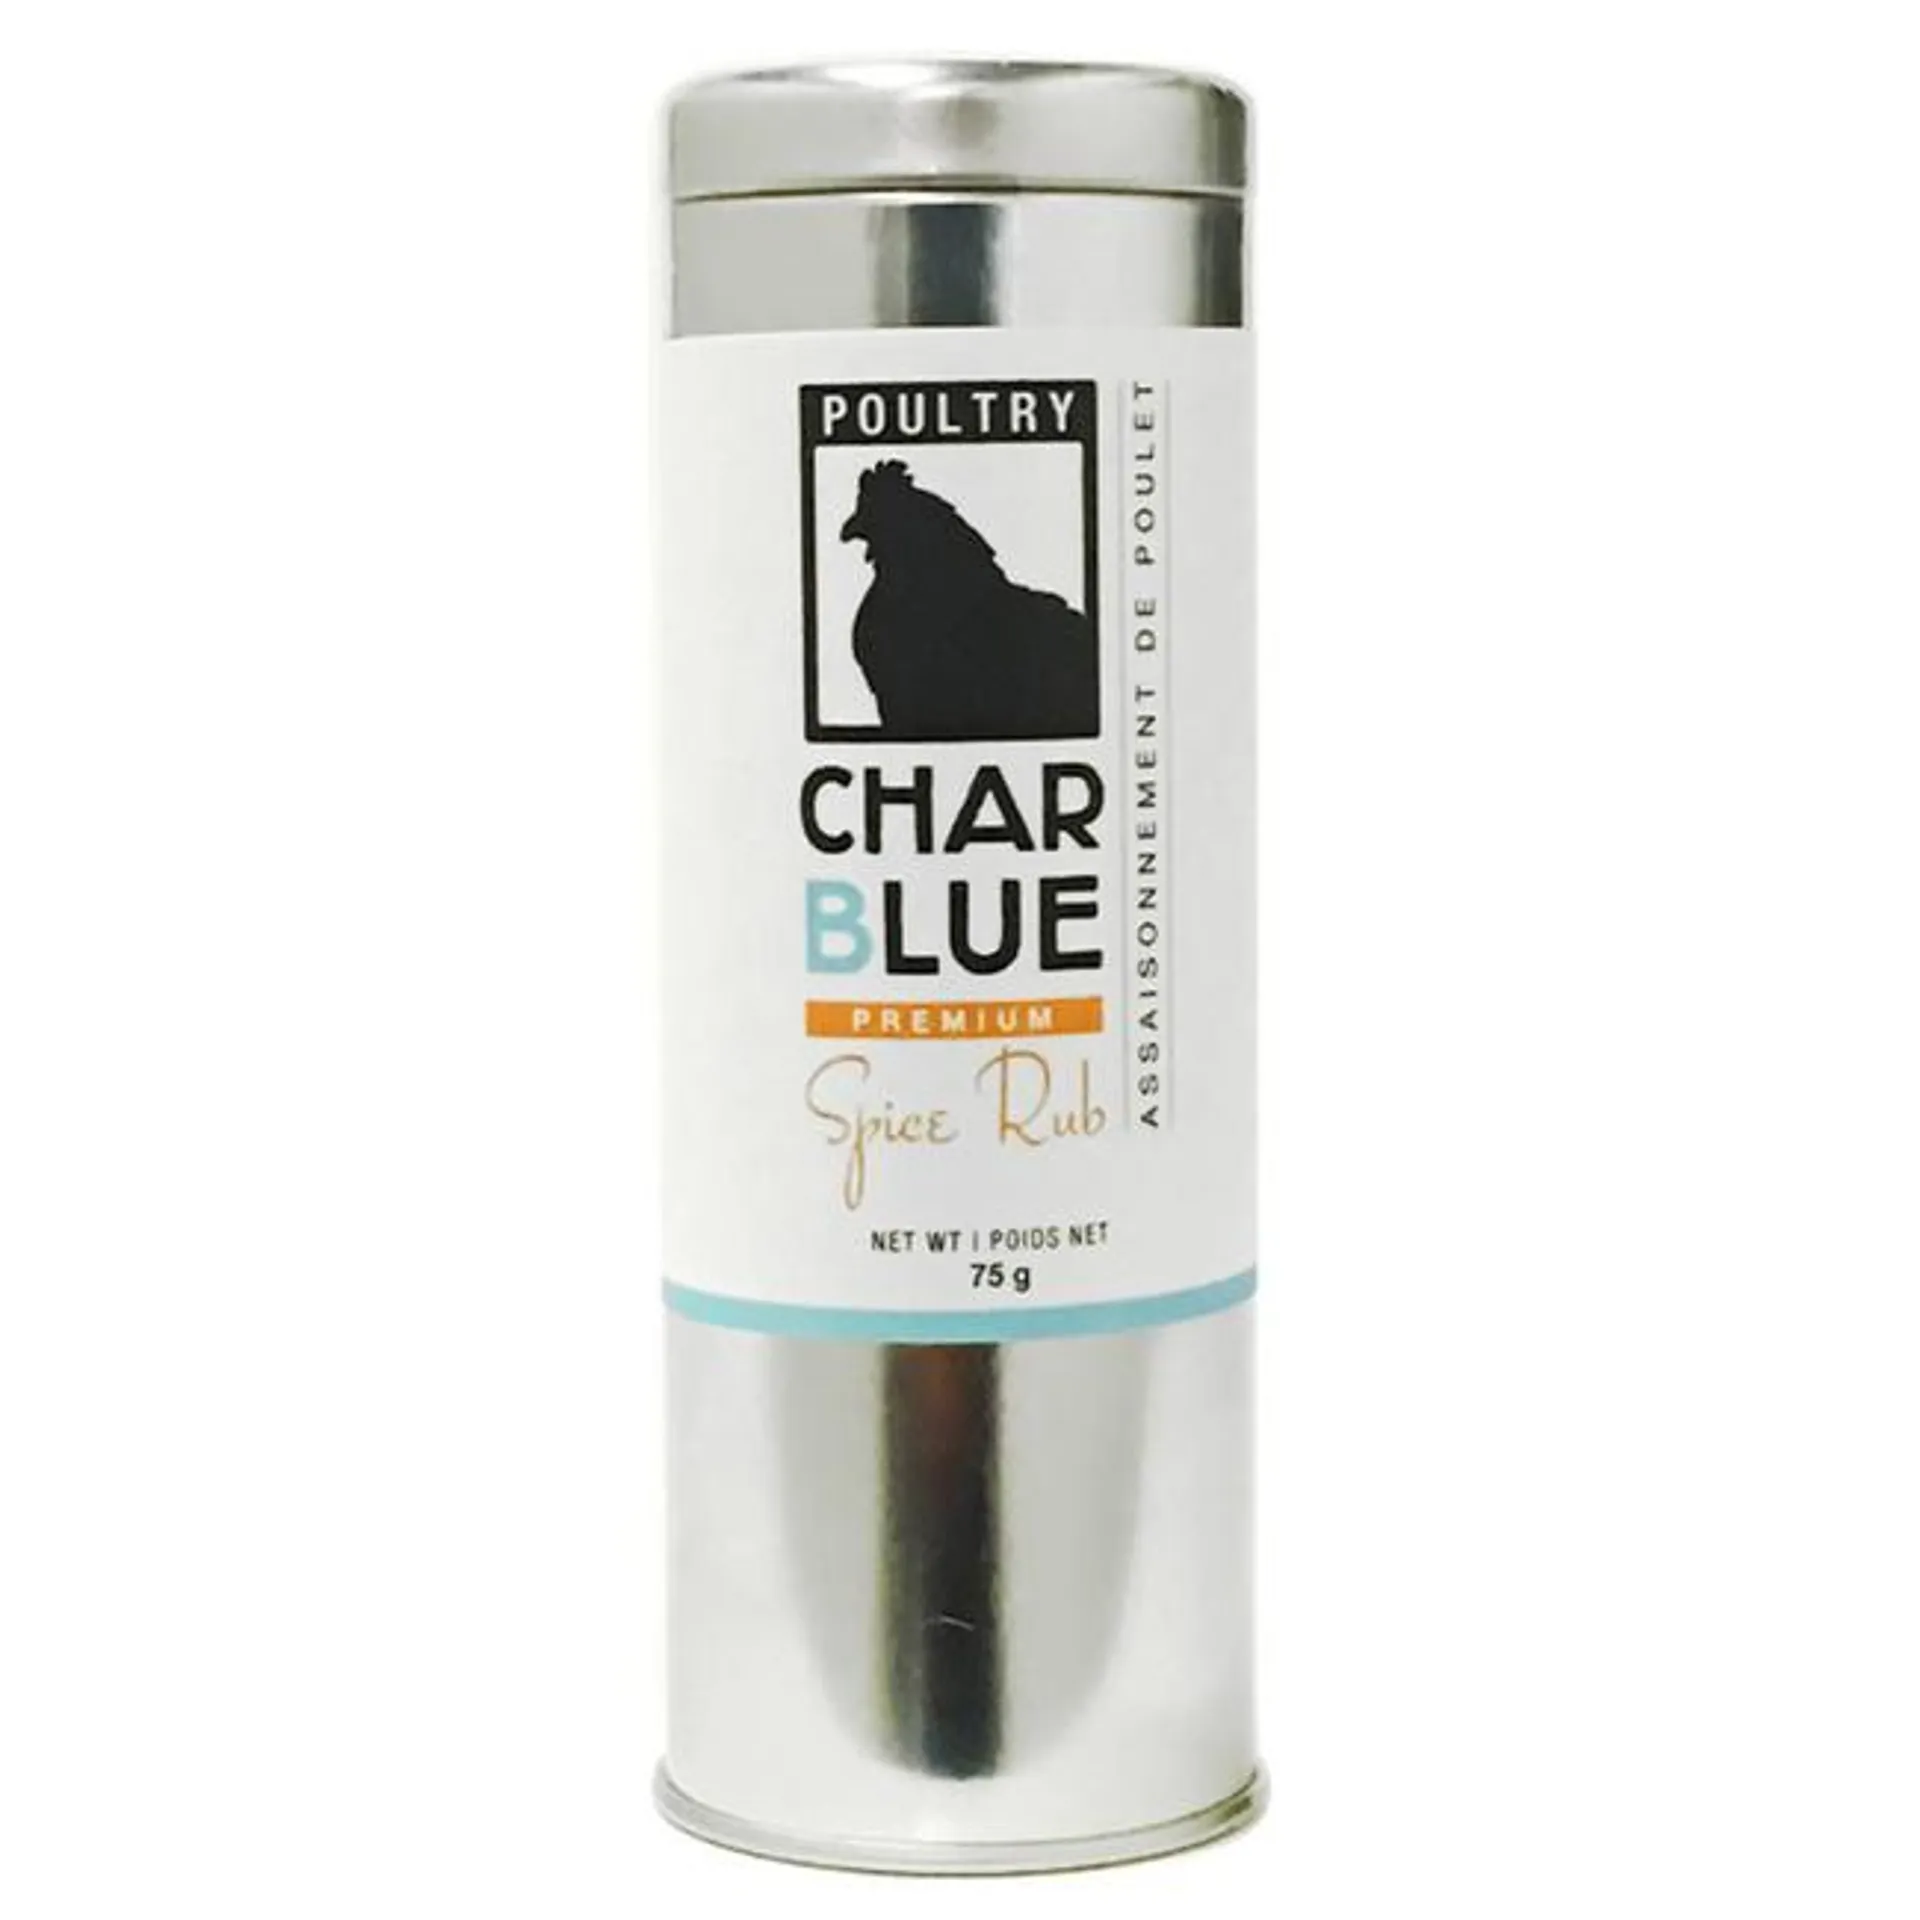 Char Blue Premium Spice Rub - Poultry